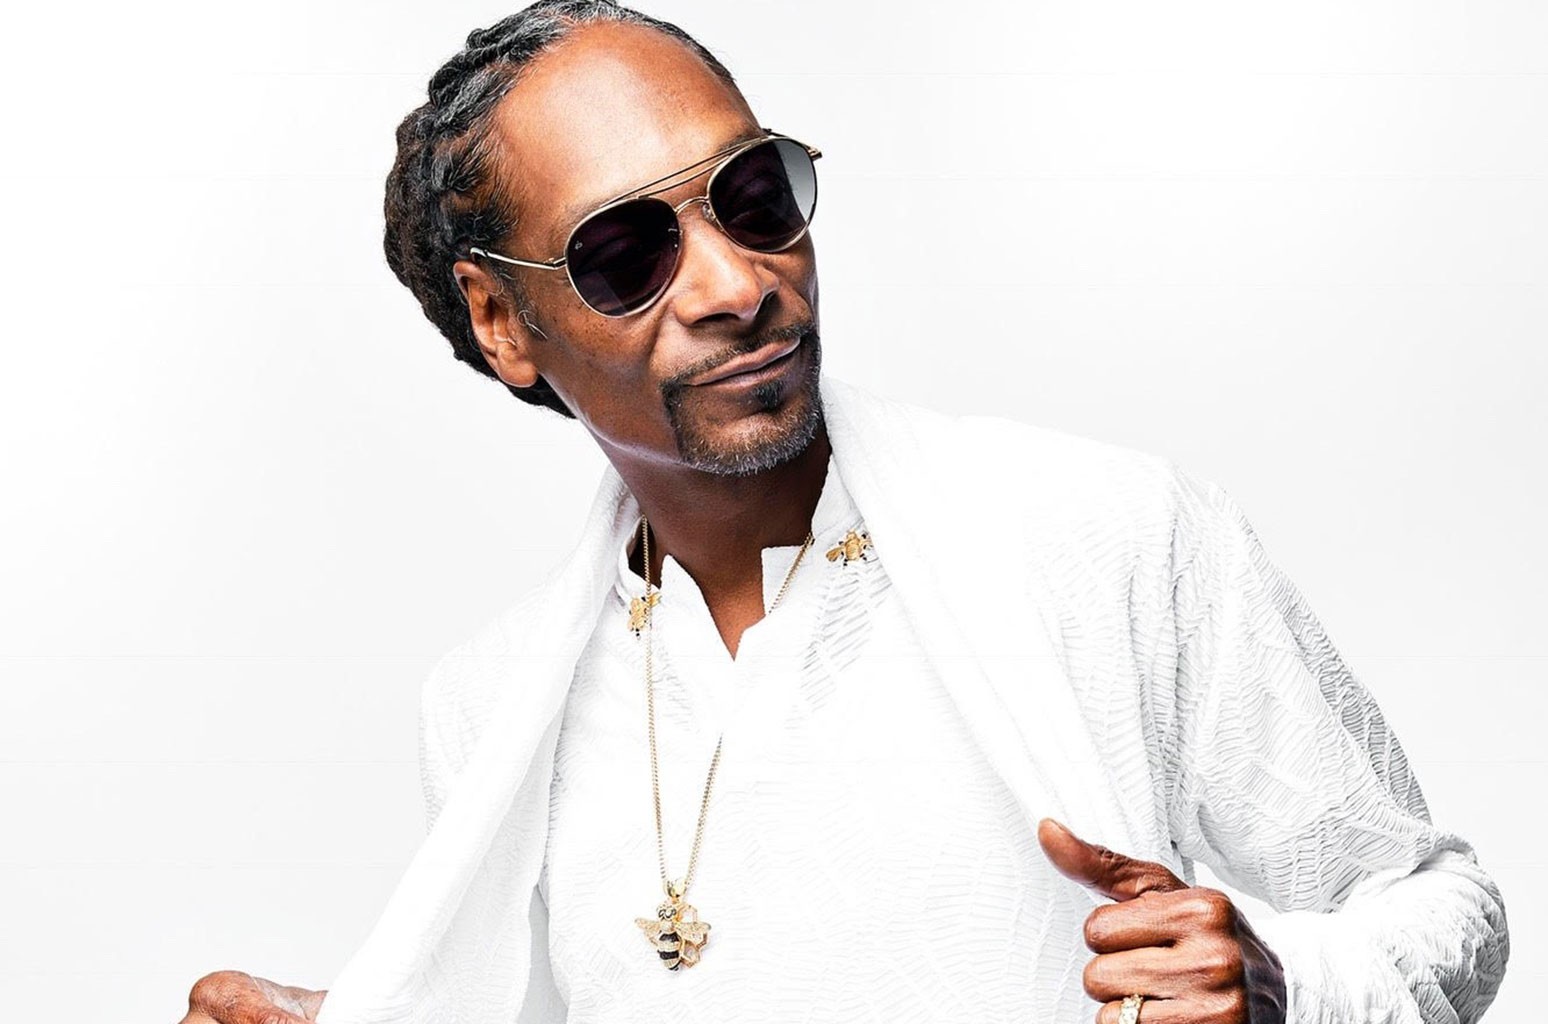 Artist Focus: Snoop Dogg